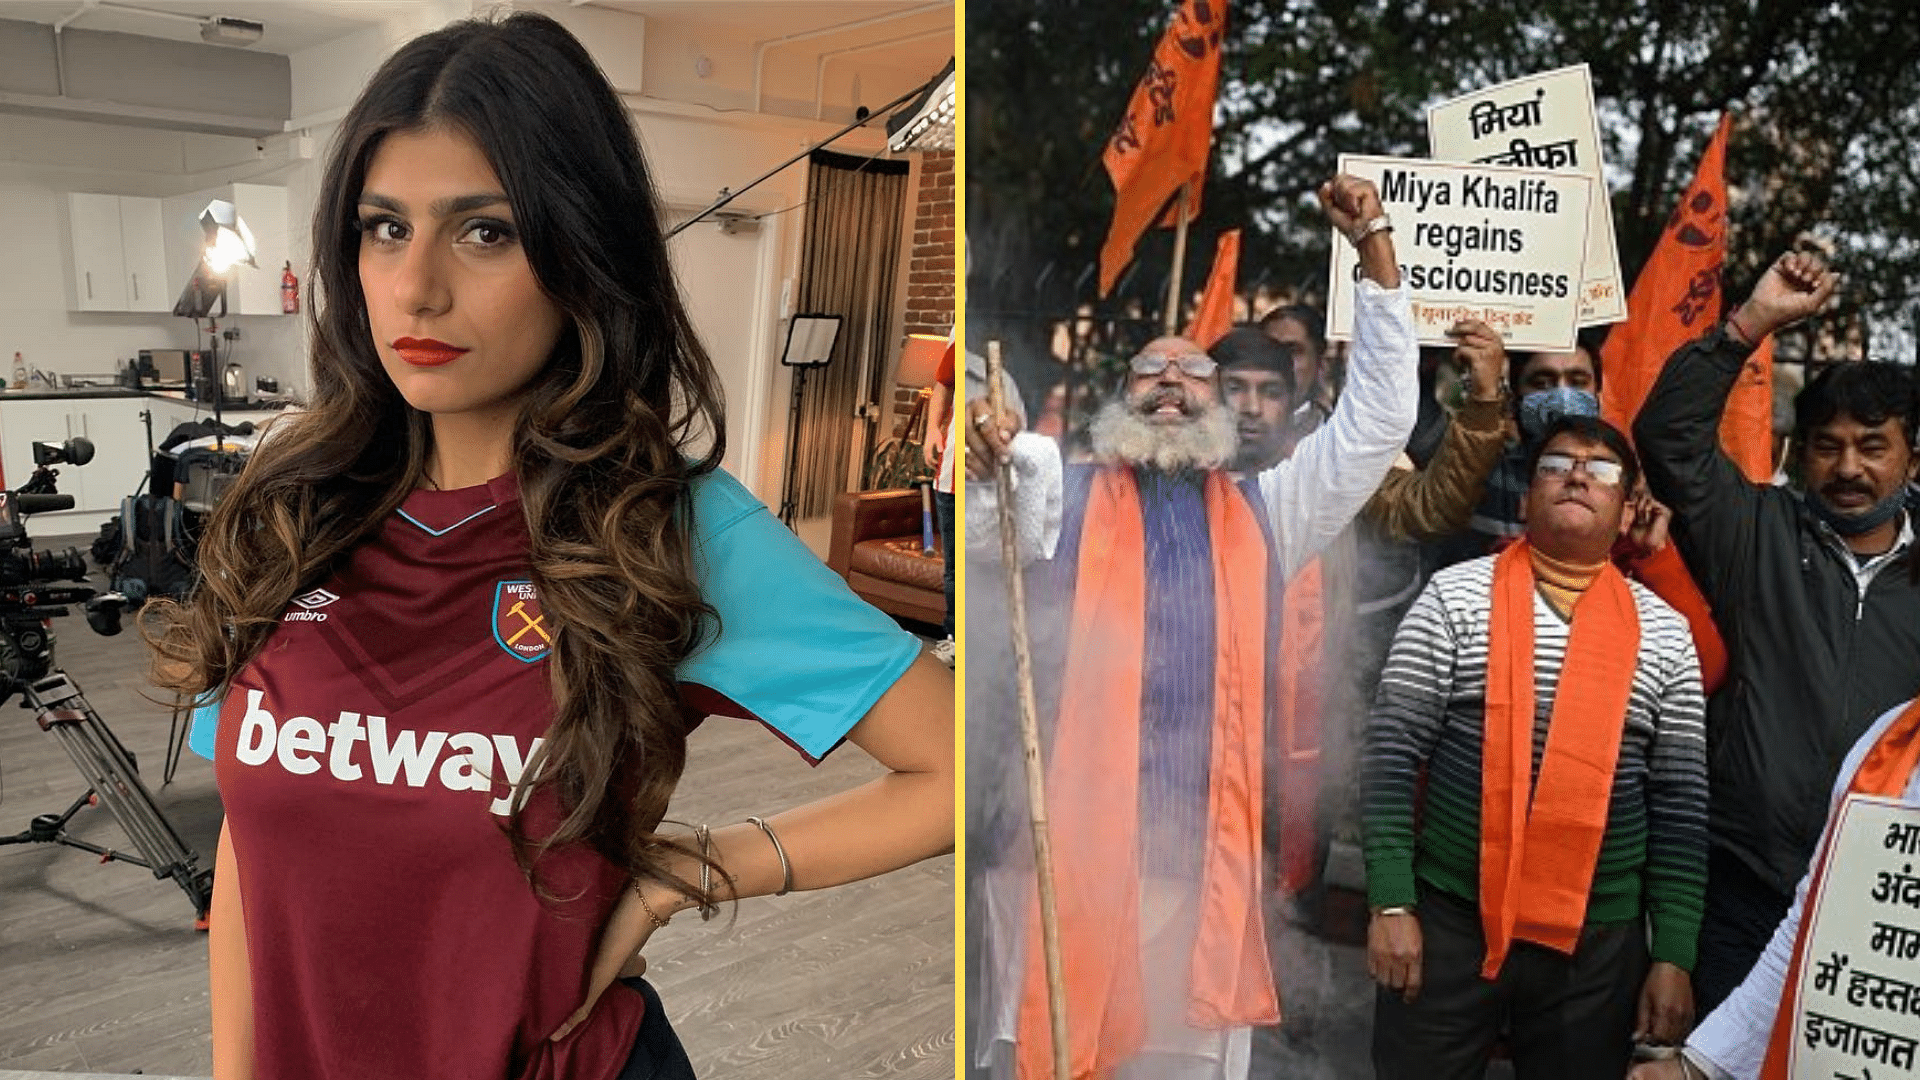 Members of the United Hindu Front held a demonstration in Delhi where they raised slogans against Mia Khalifa, Rihanna and Greta Thunberg.